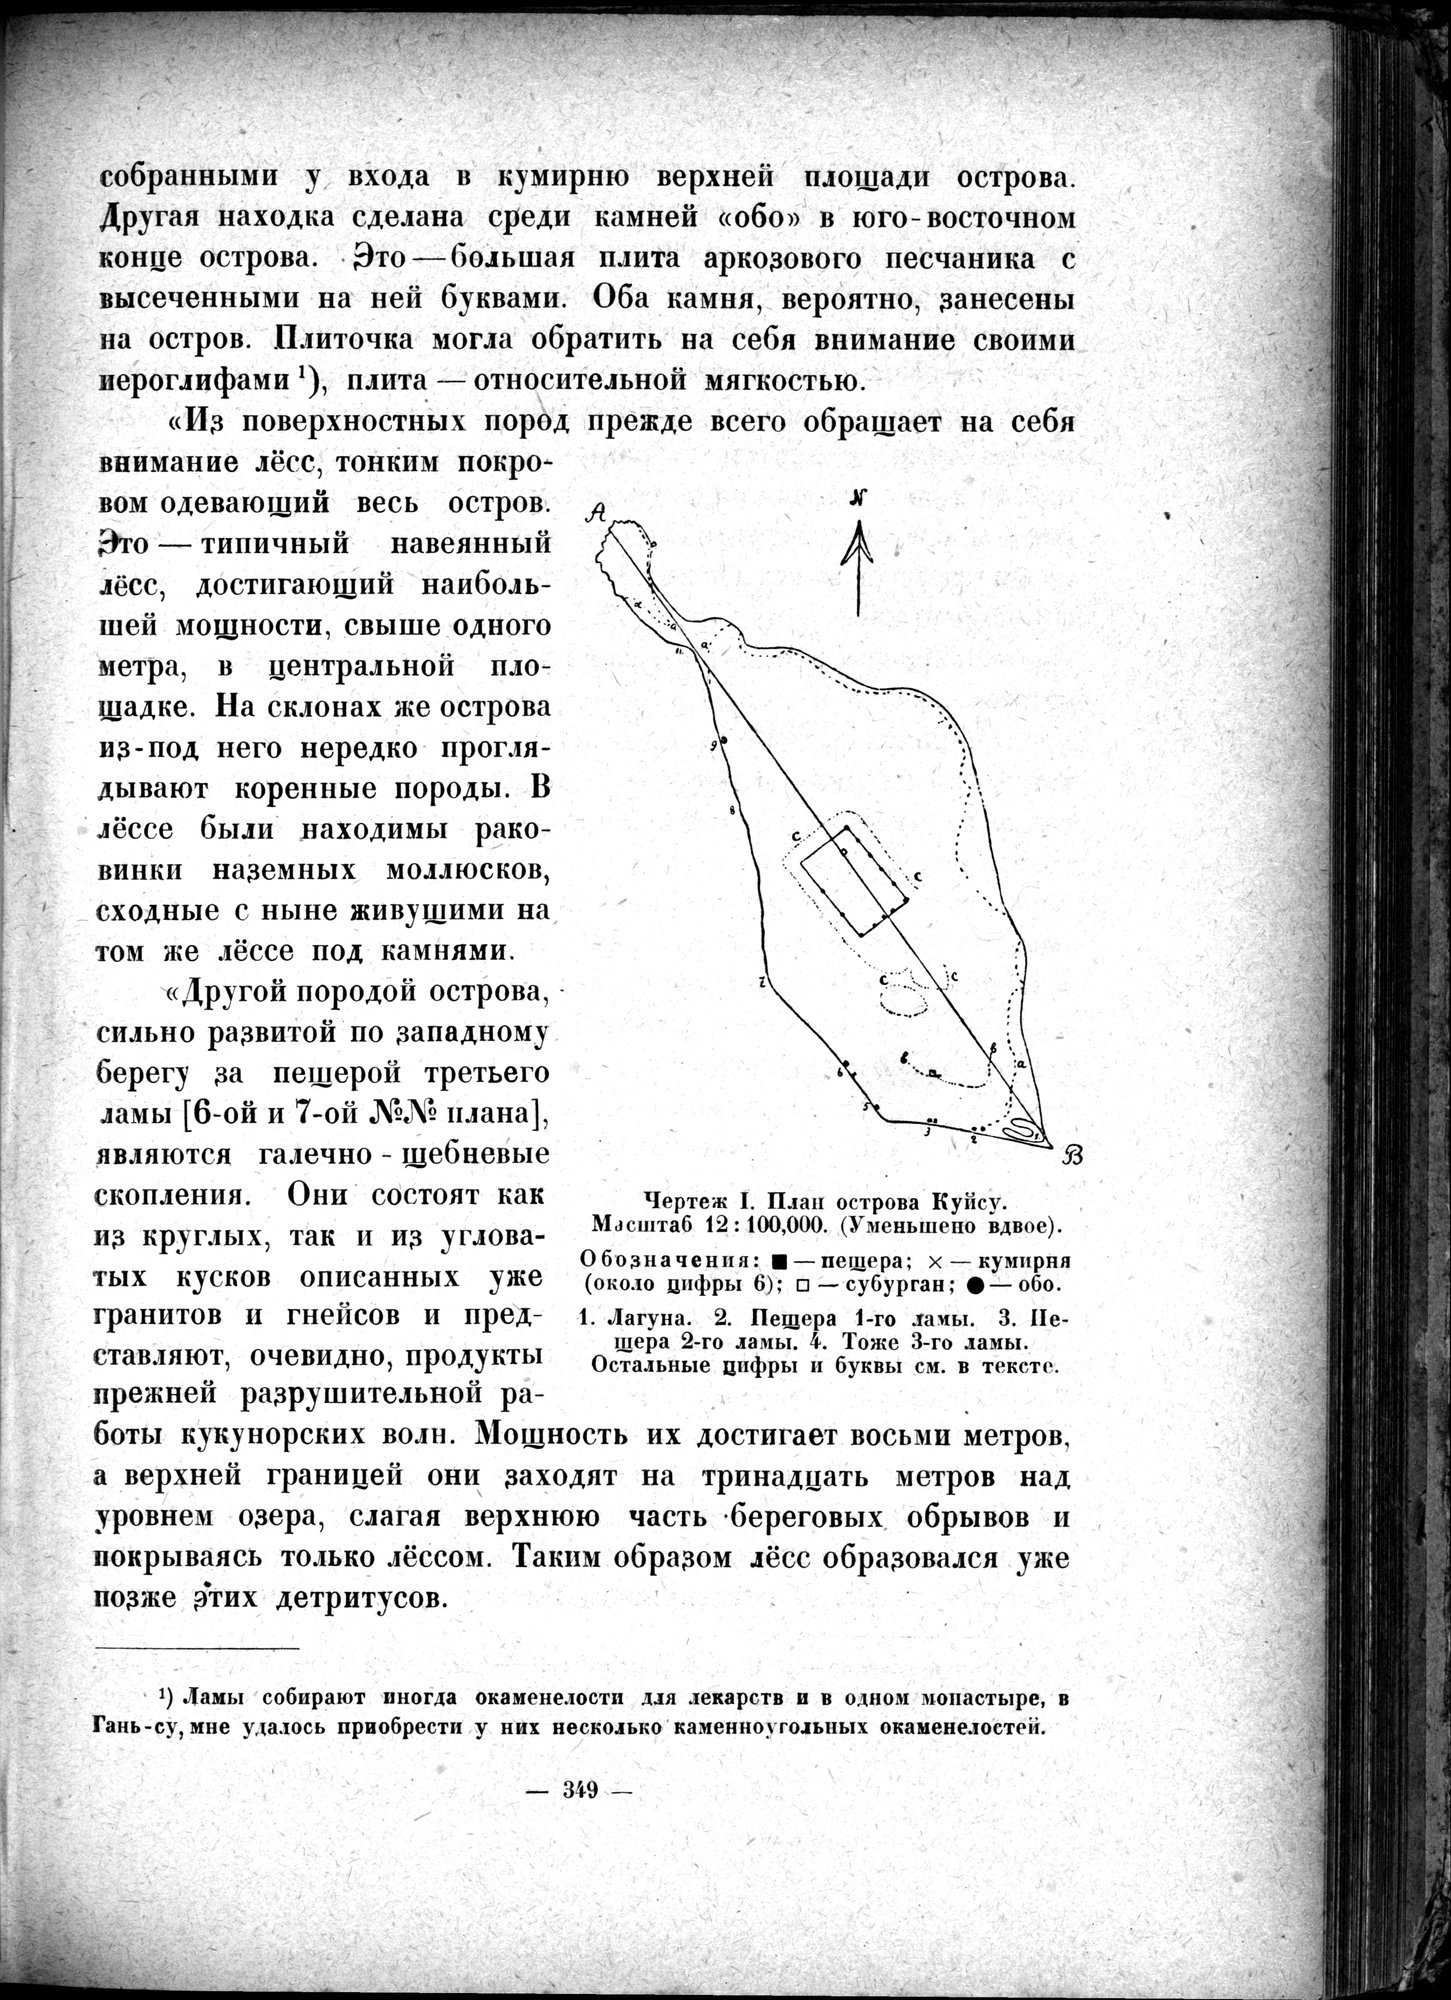 Mongoliya i Amdo i mertby gorod Khara-Khoto : vol.1 / Page 399 (Grayscale High Resolution Image)